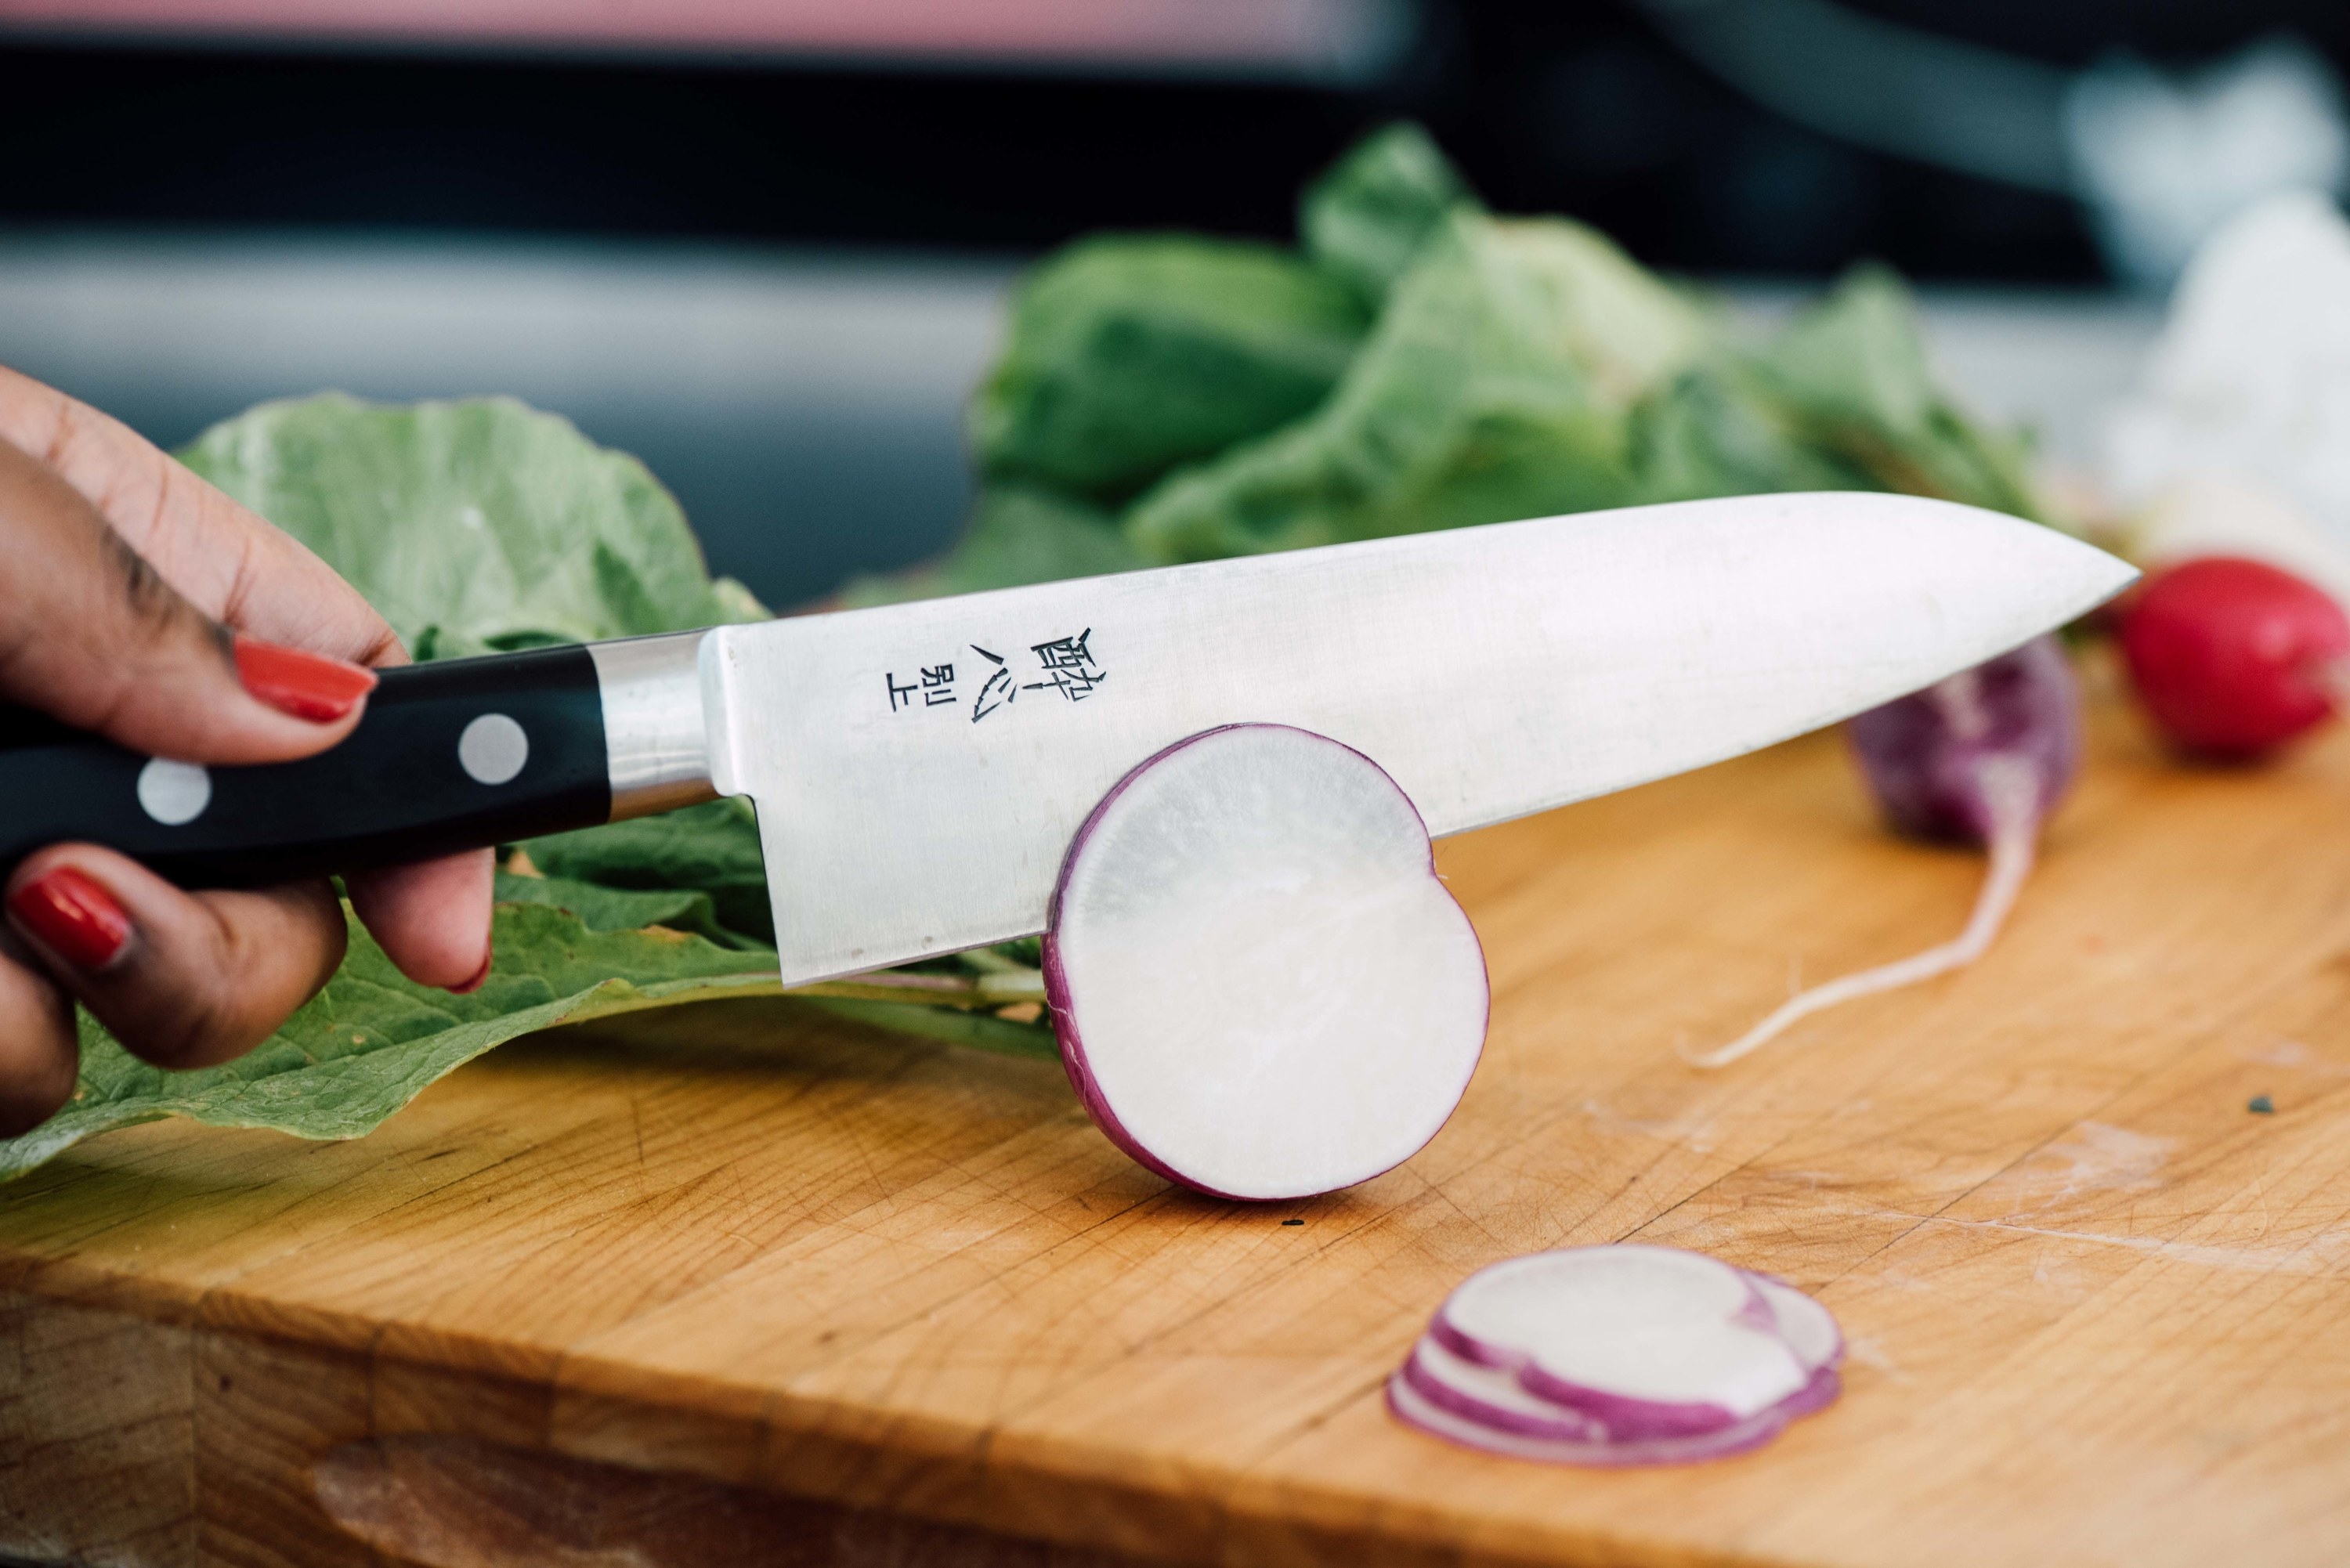 Knife cutting into onion 